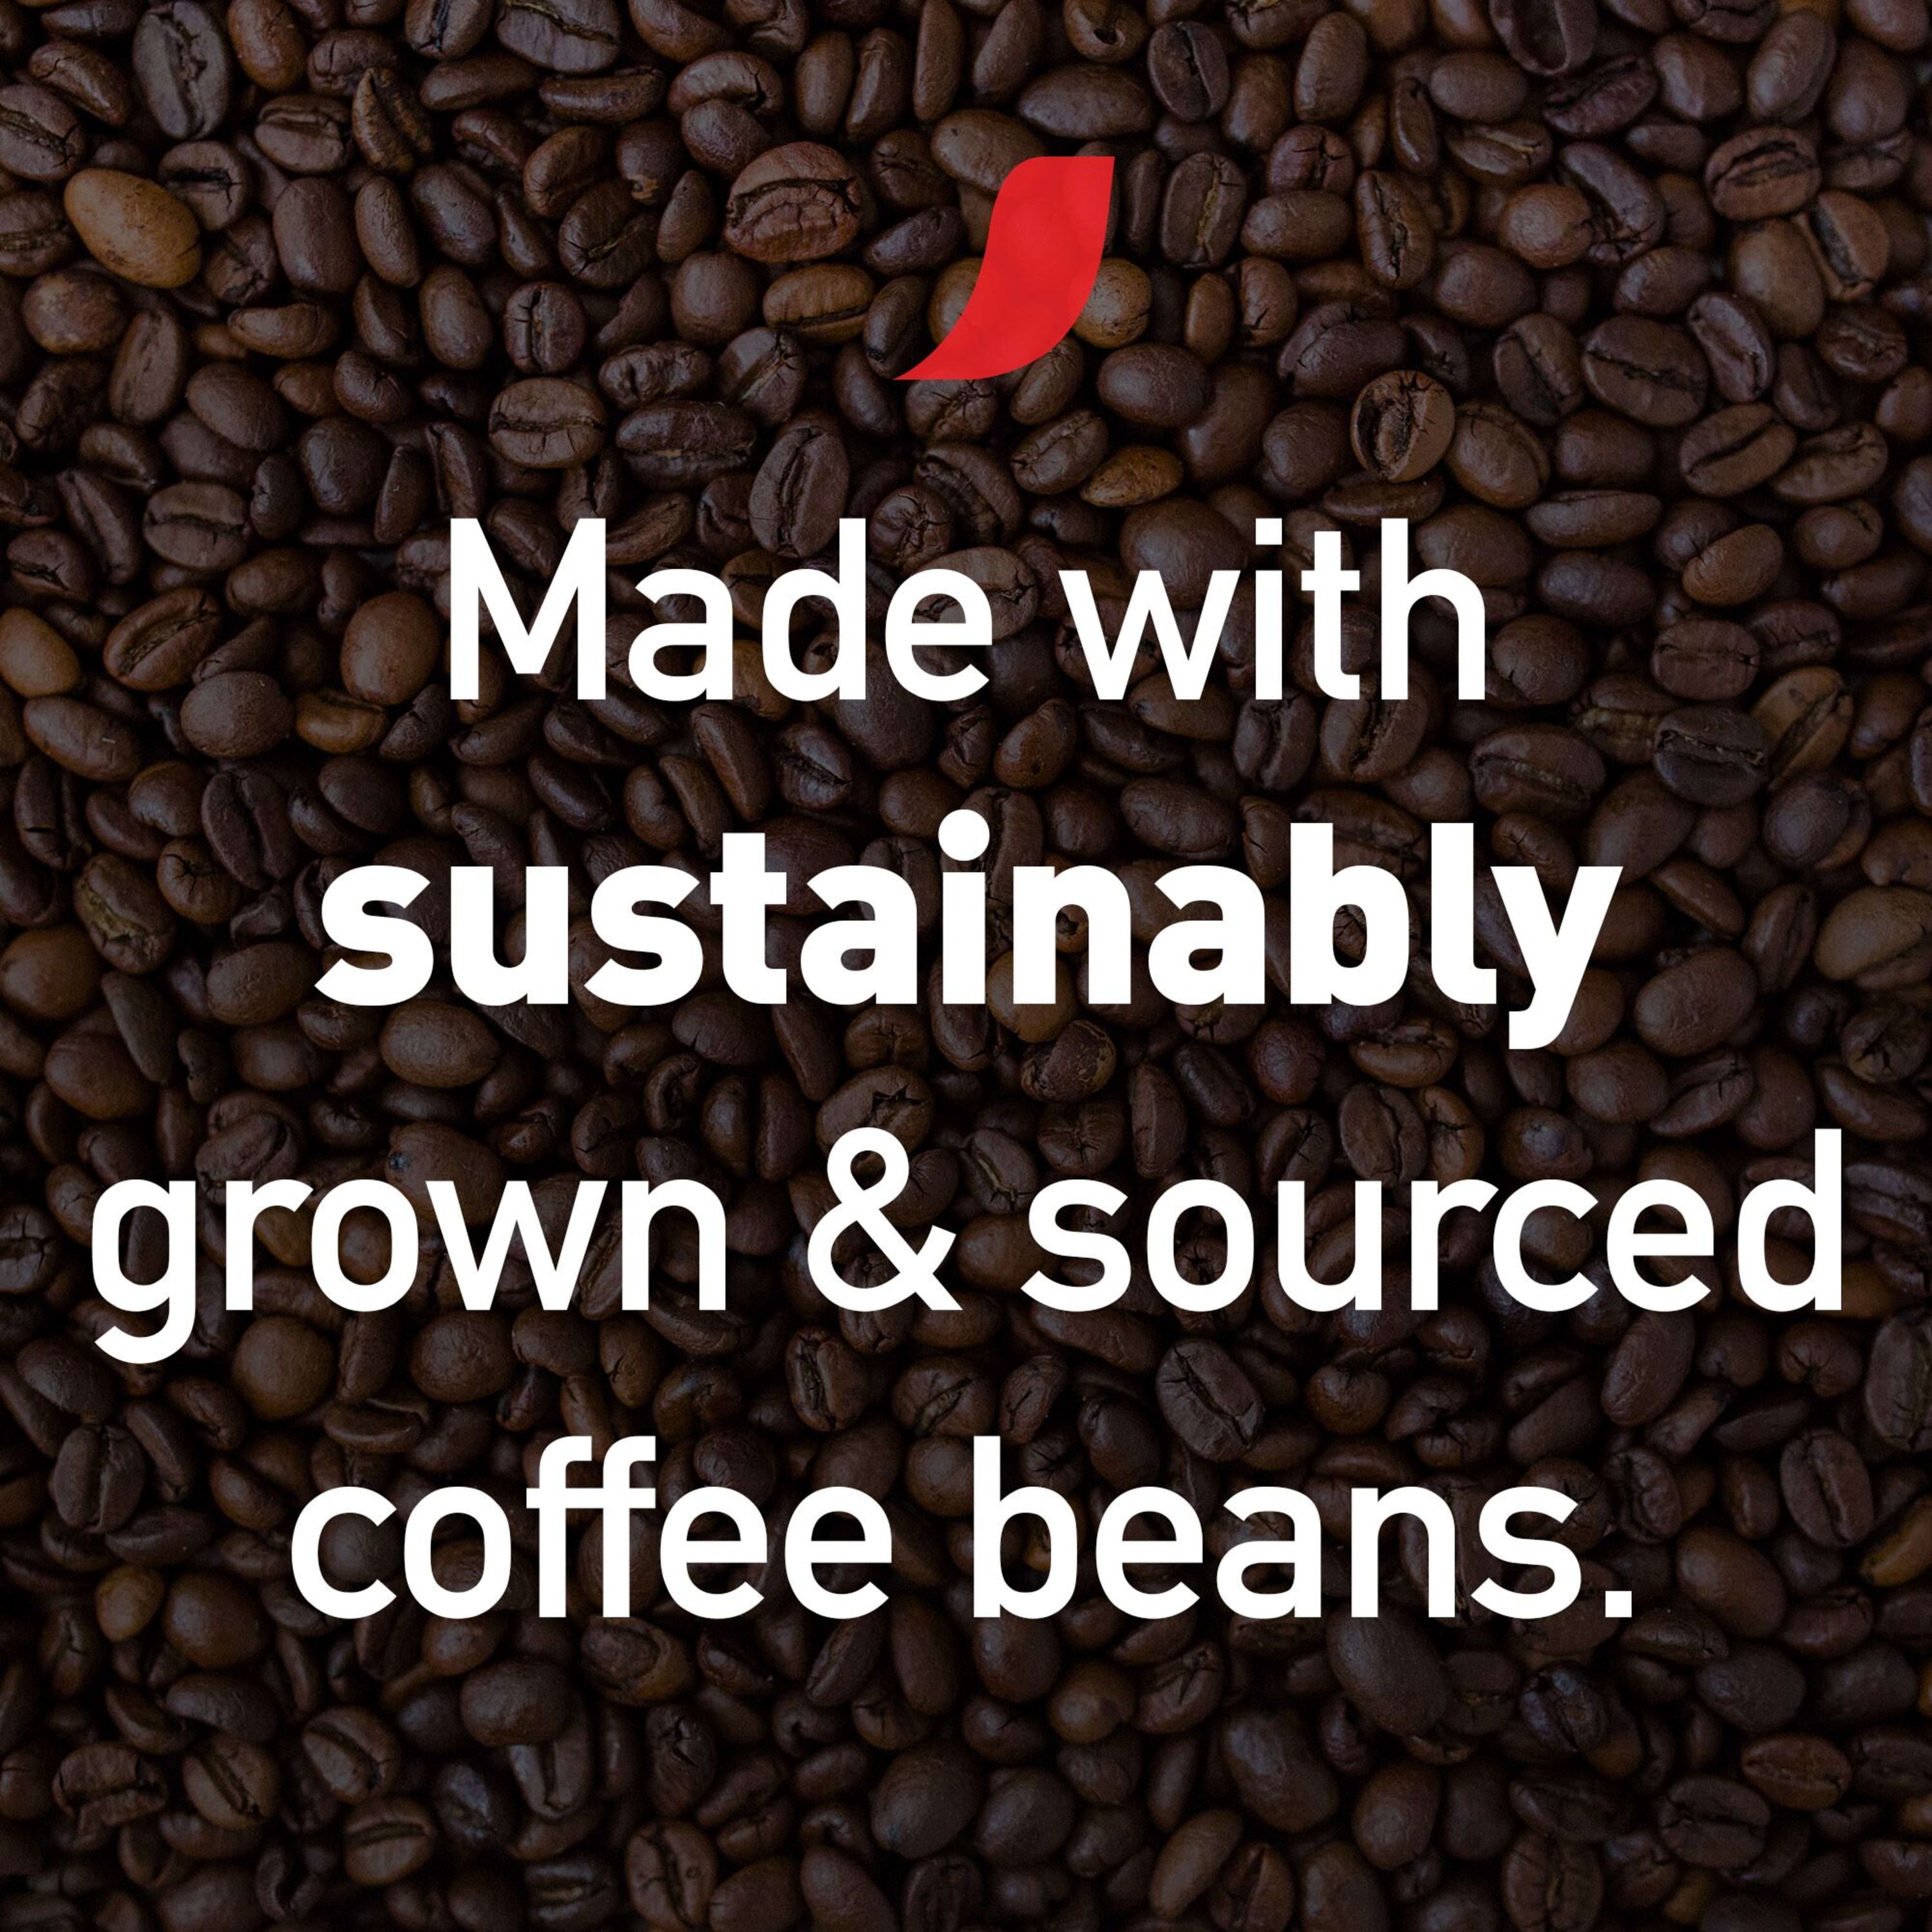 Nescafe 100% pure decaffeinated soluble coffee (80 g / 2.82 oz)